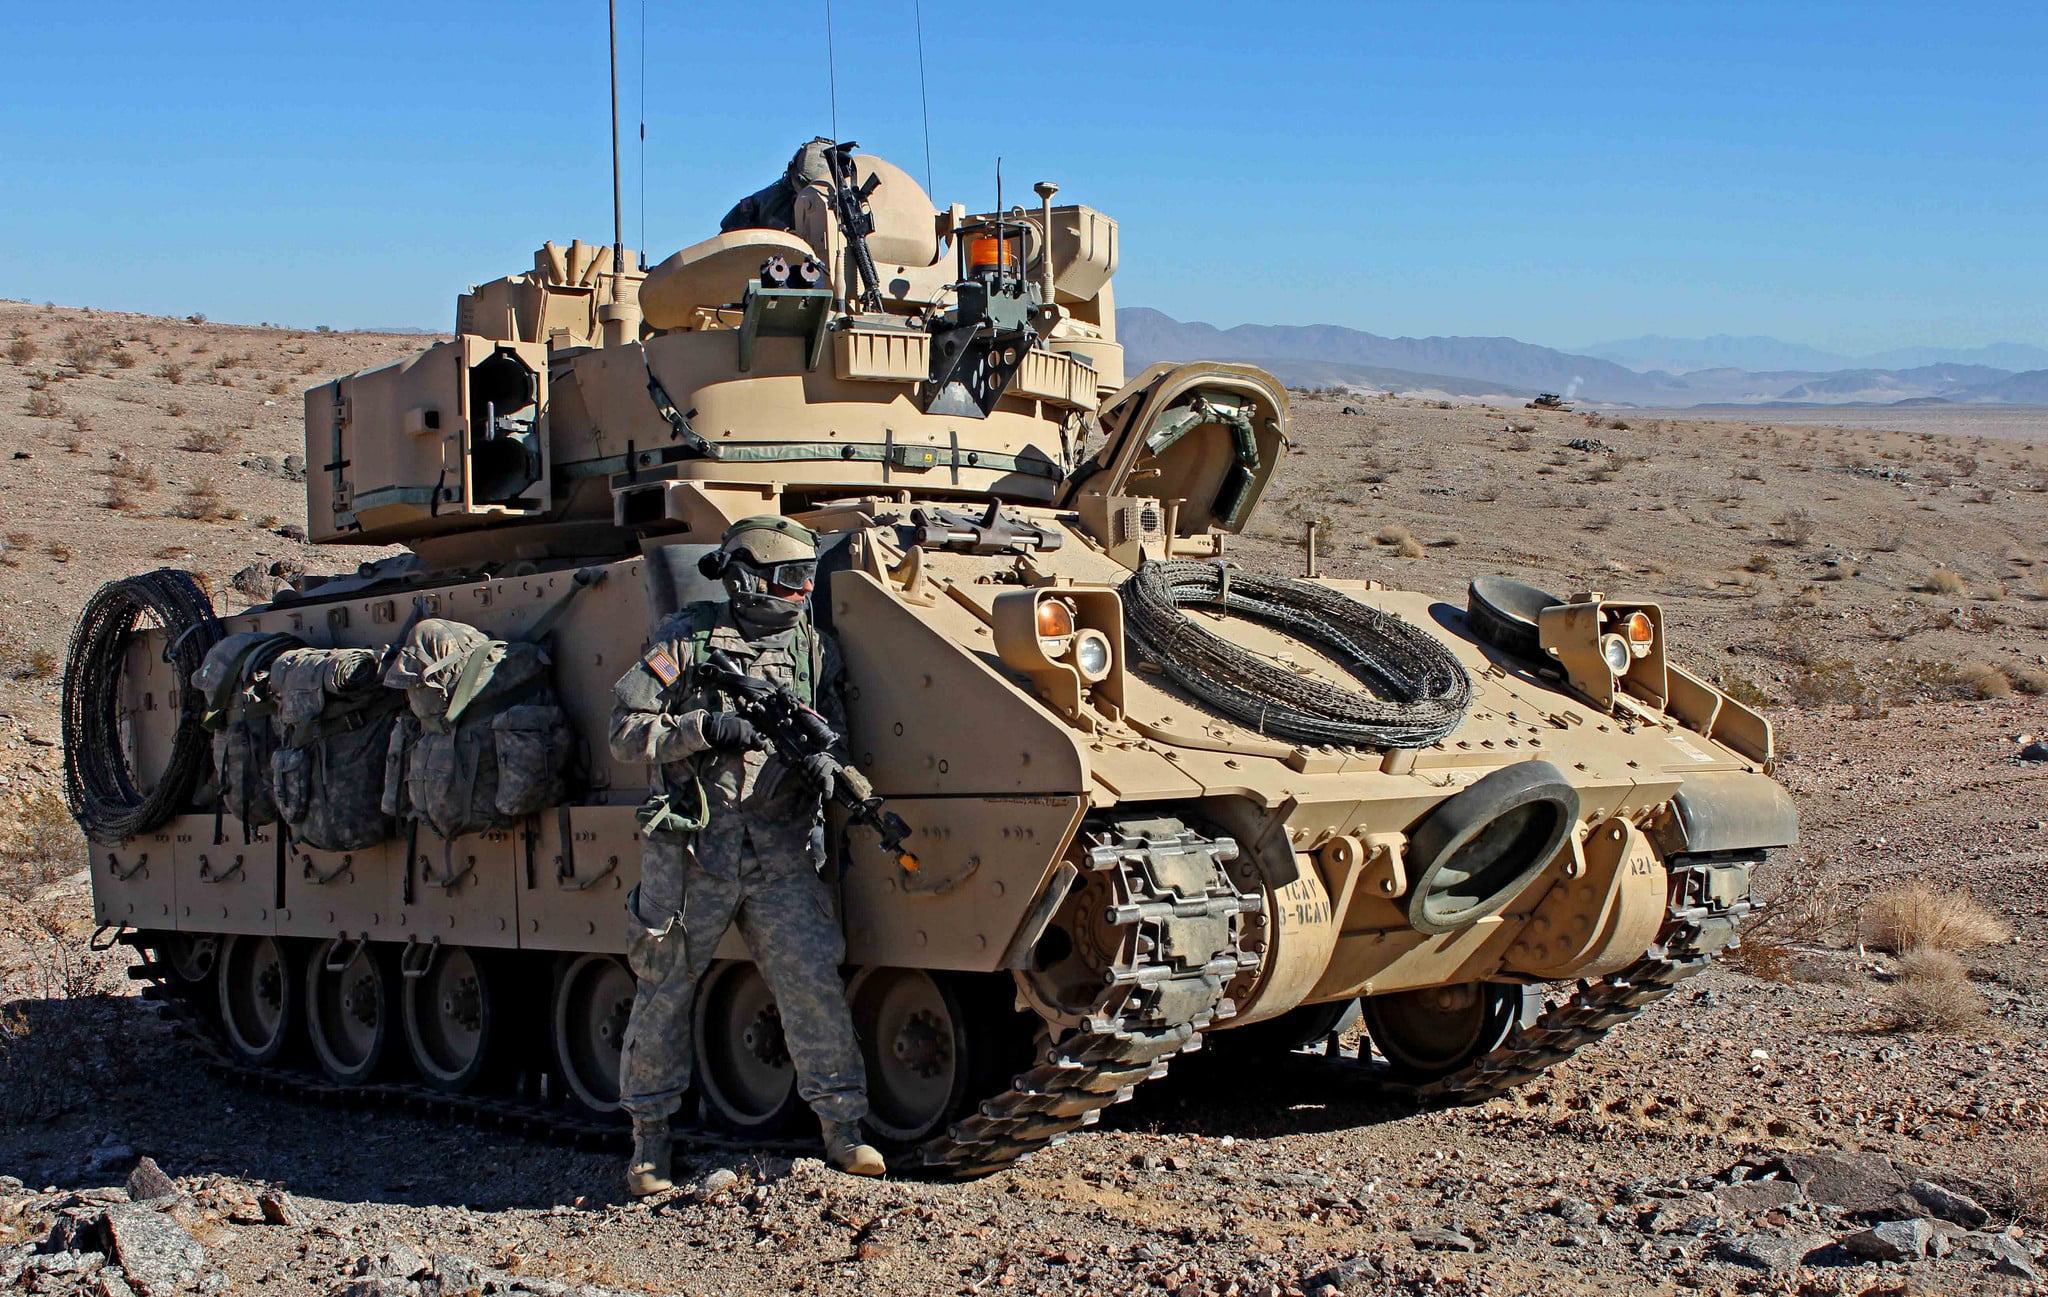 brown and black battle tank, USA, military equipment, M2 Bradley